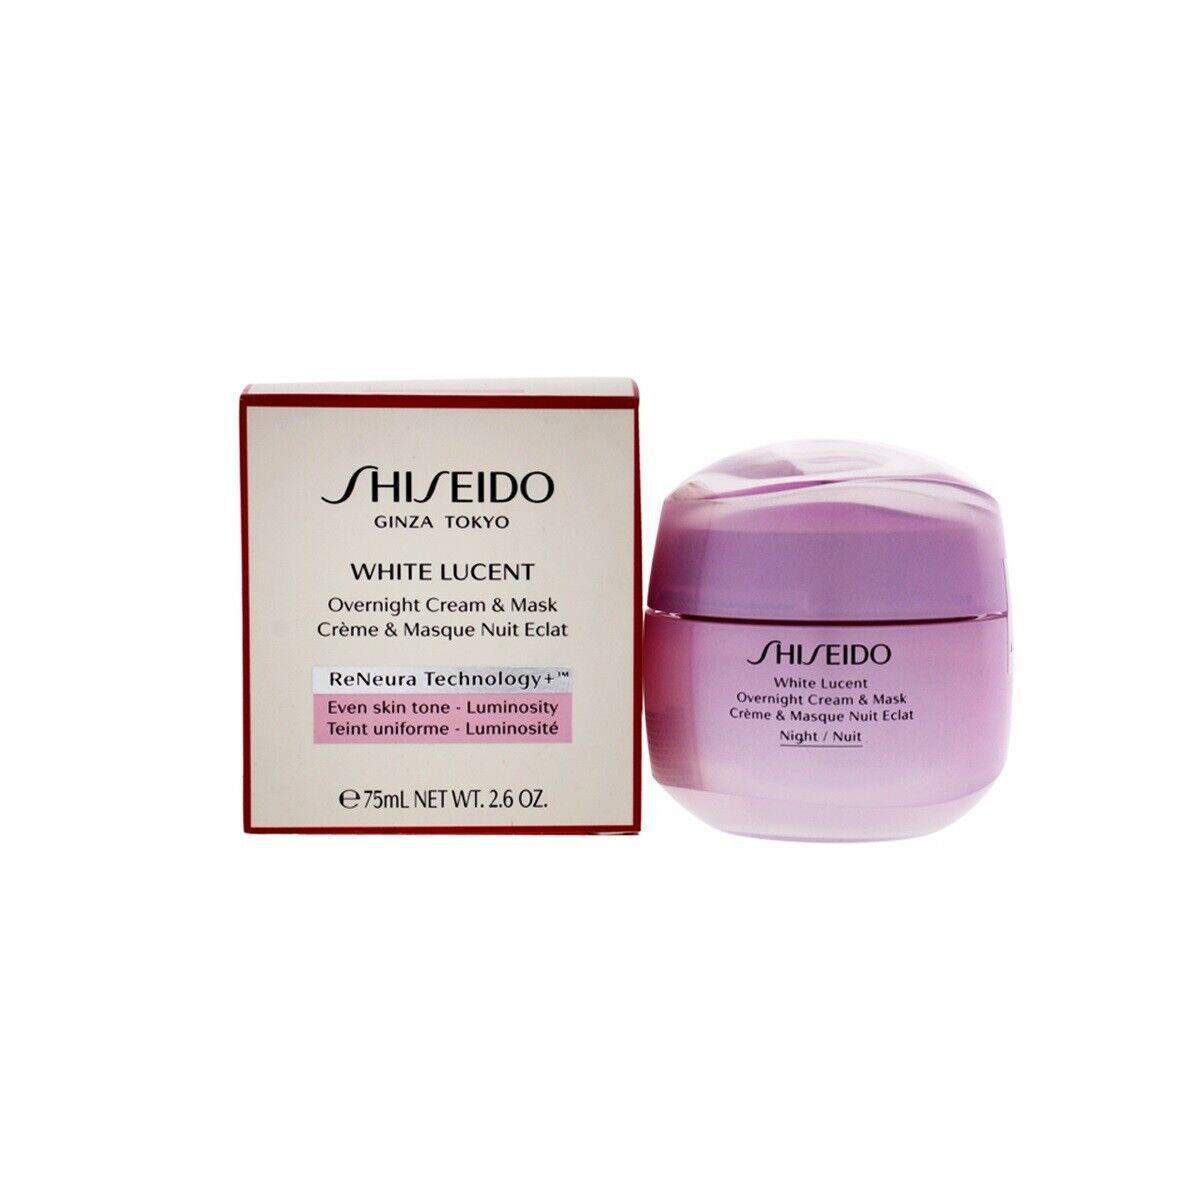 Shiseido White Lucent Overnight Cream Mask - Size 75mL / 2.6 Oz. Box